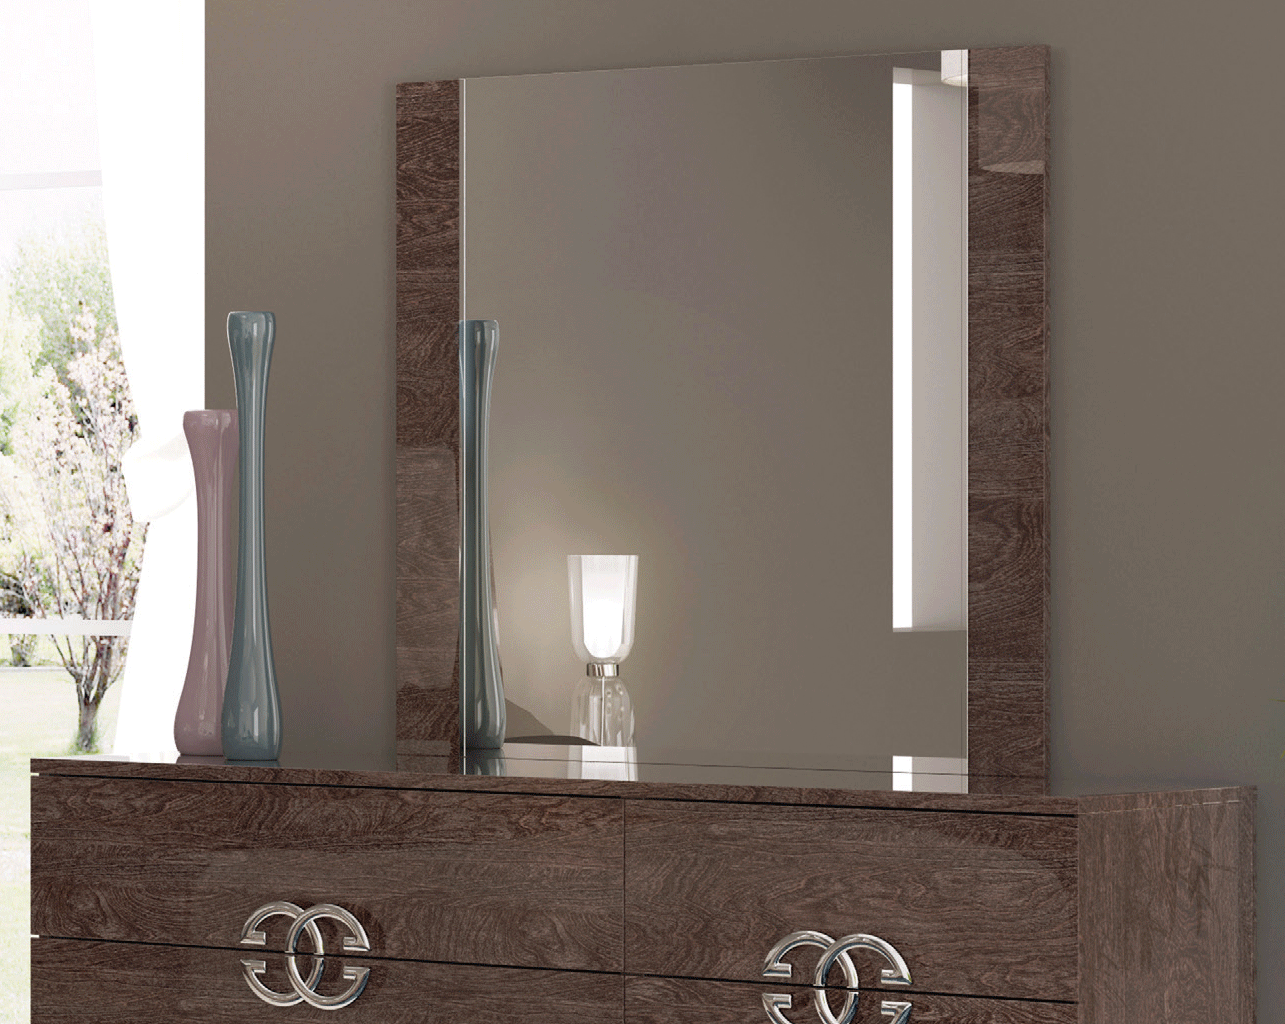 Brands Franco AZKARY II CONSOLES, Spain Prestige mirror for dresser